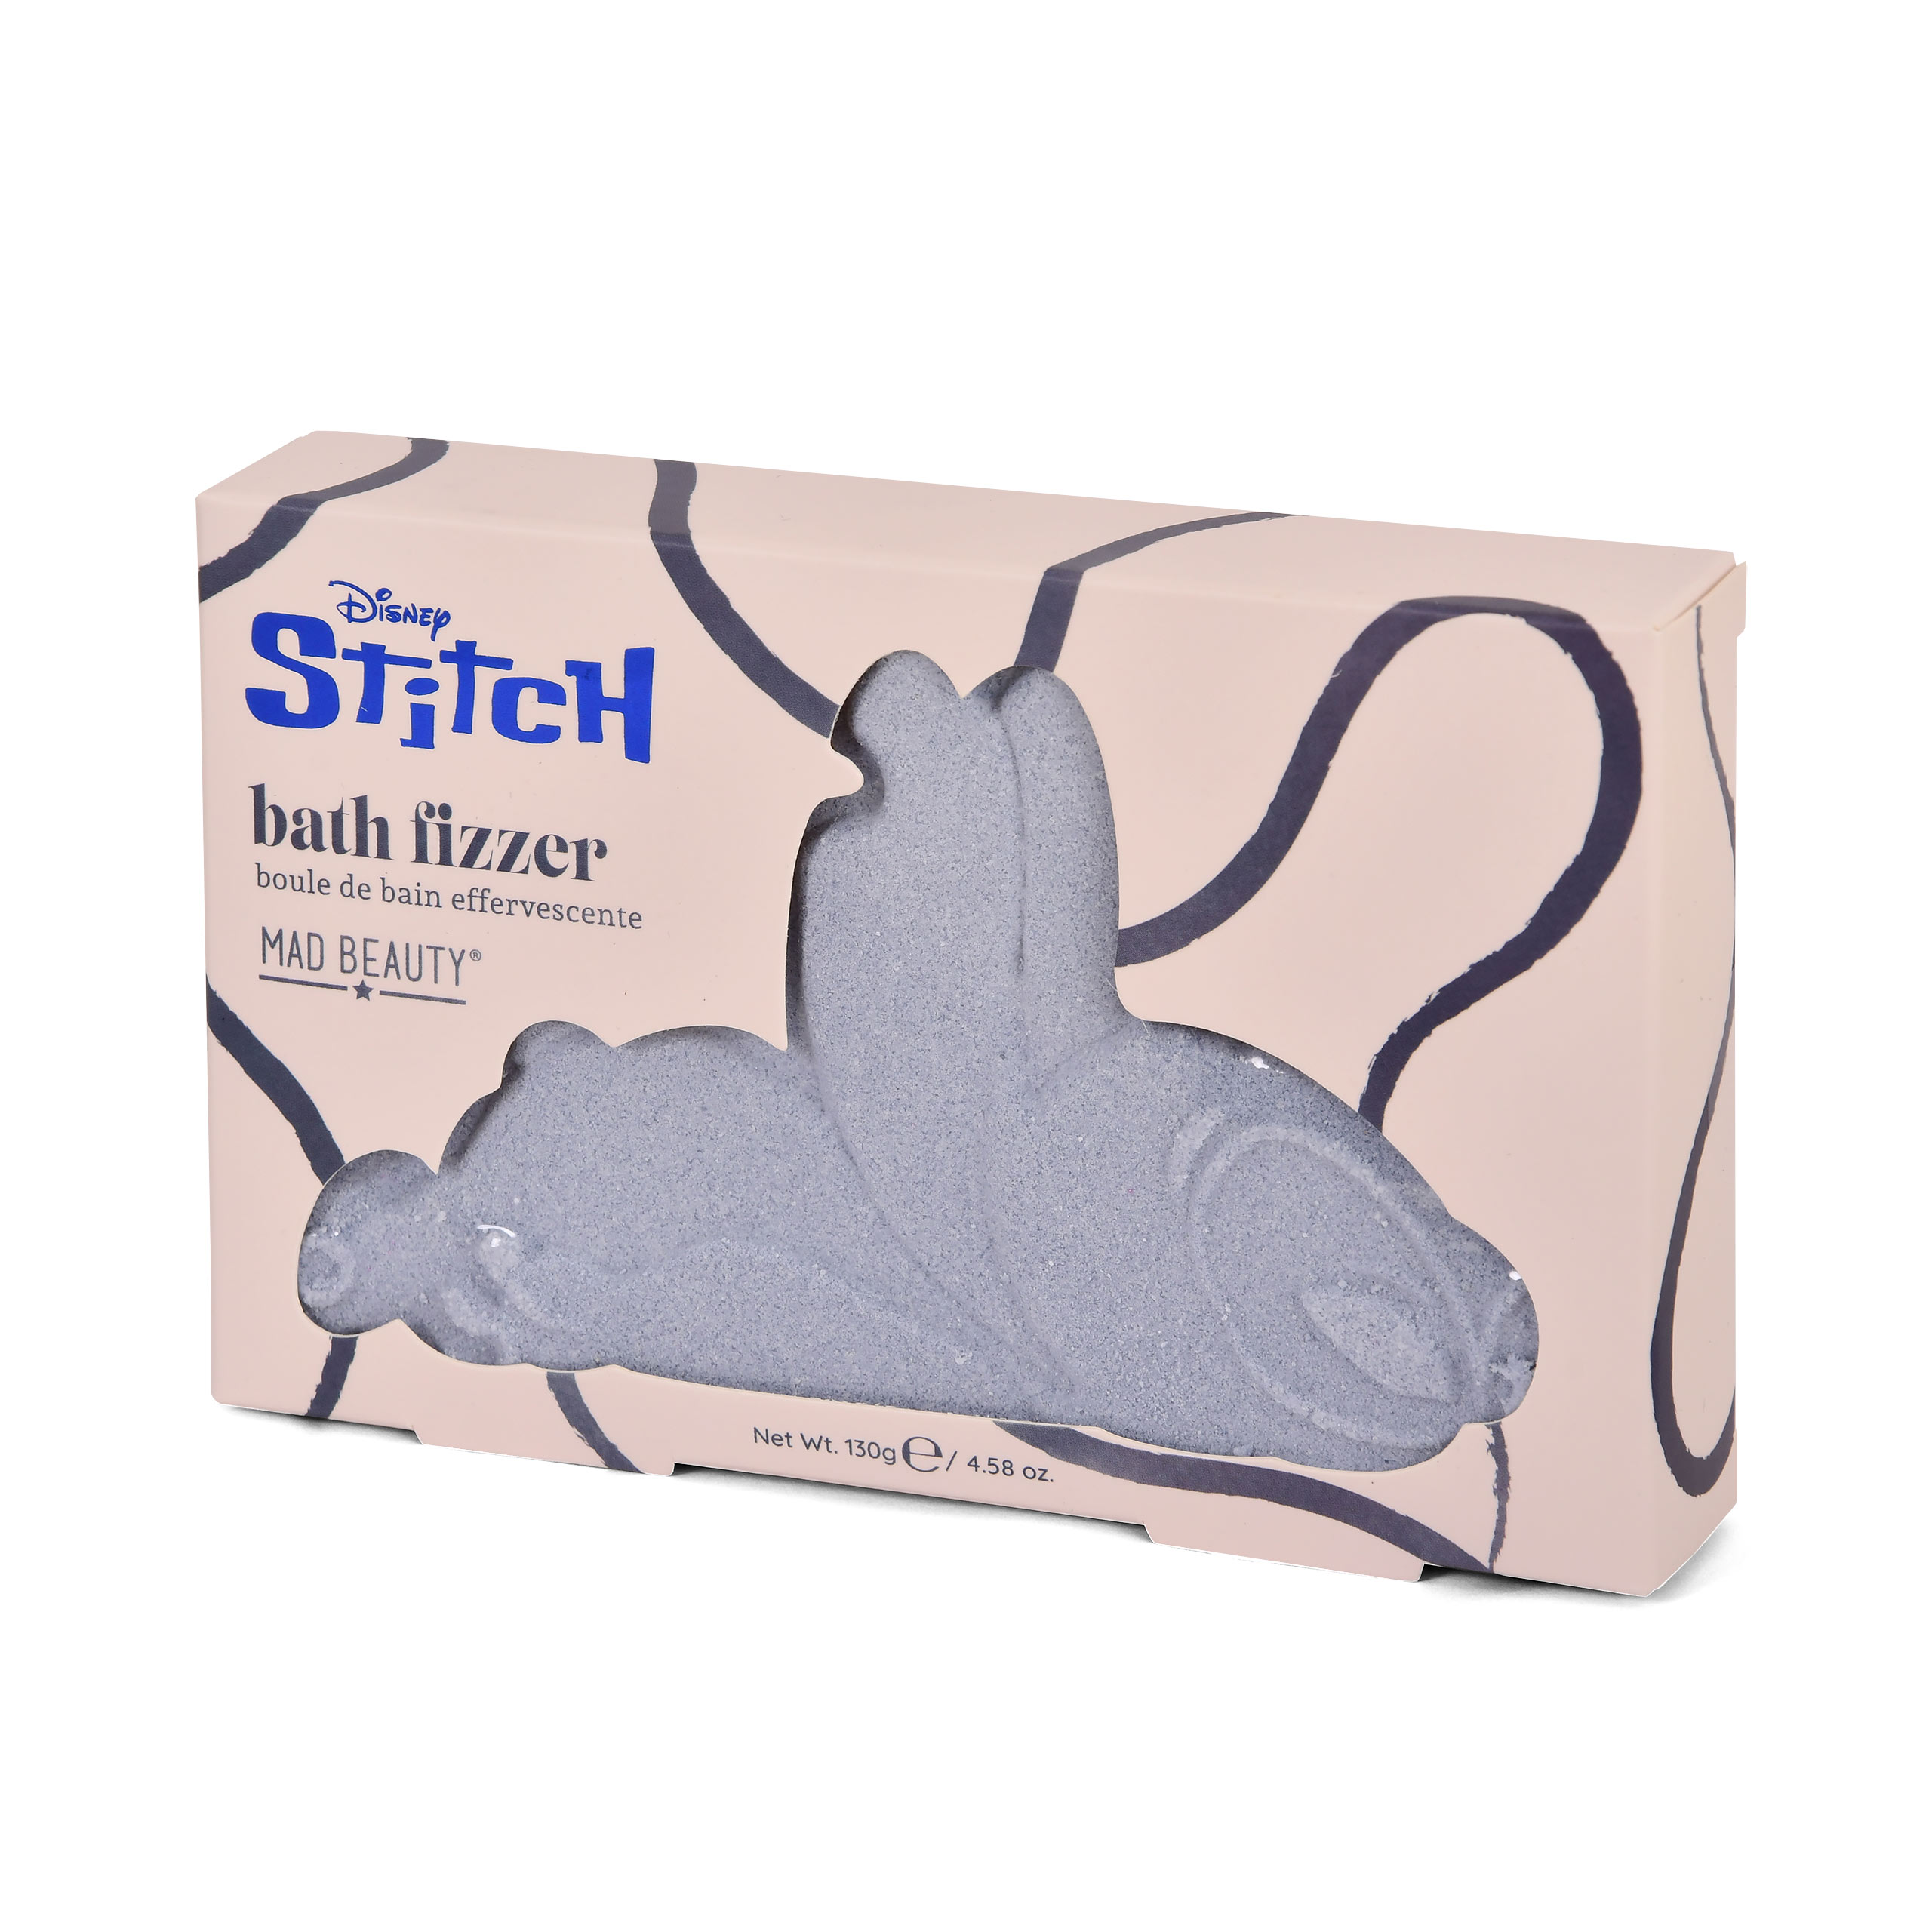 Stitch Badbruisbal - Lilo & Stitch